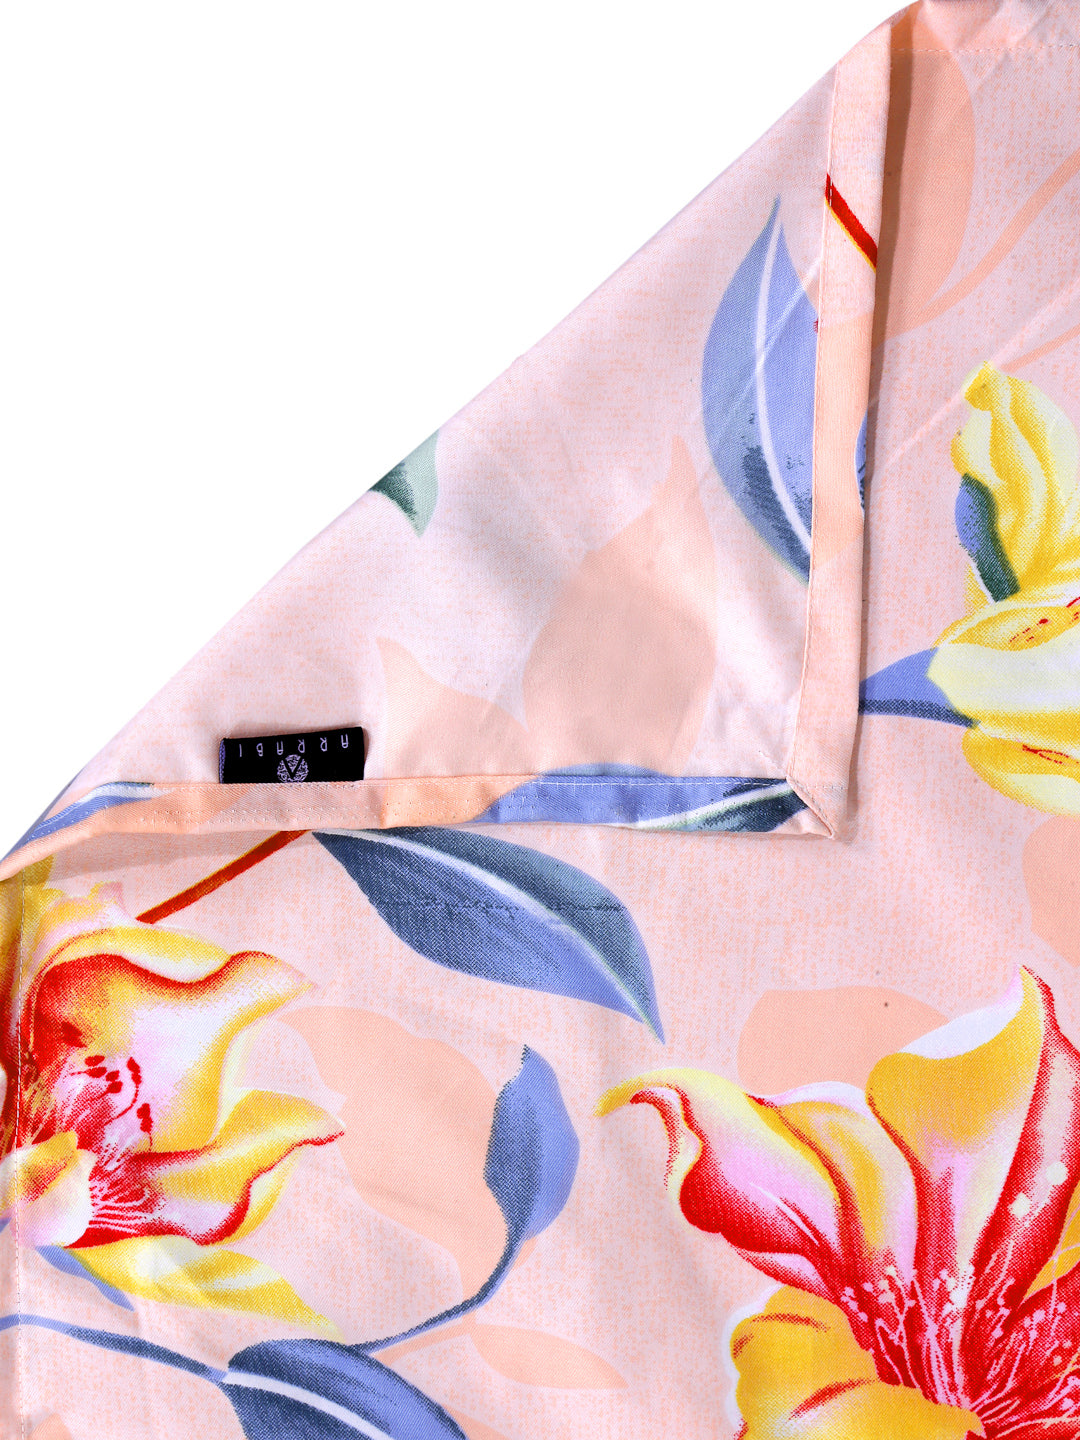 Arrabi Peach Floral TC Cotton Blend King Size Bedsheet with 2 Pillow Covers (250 x 220 cm)